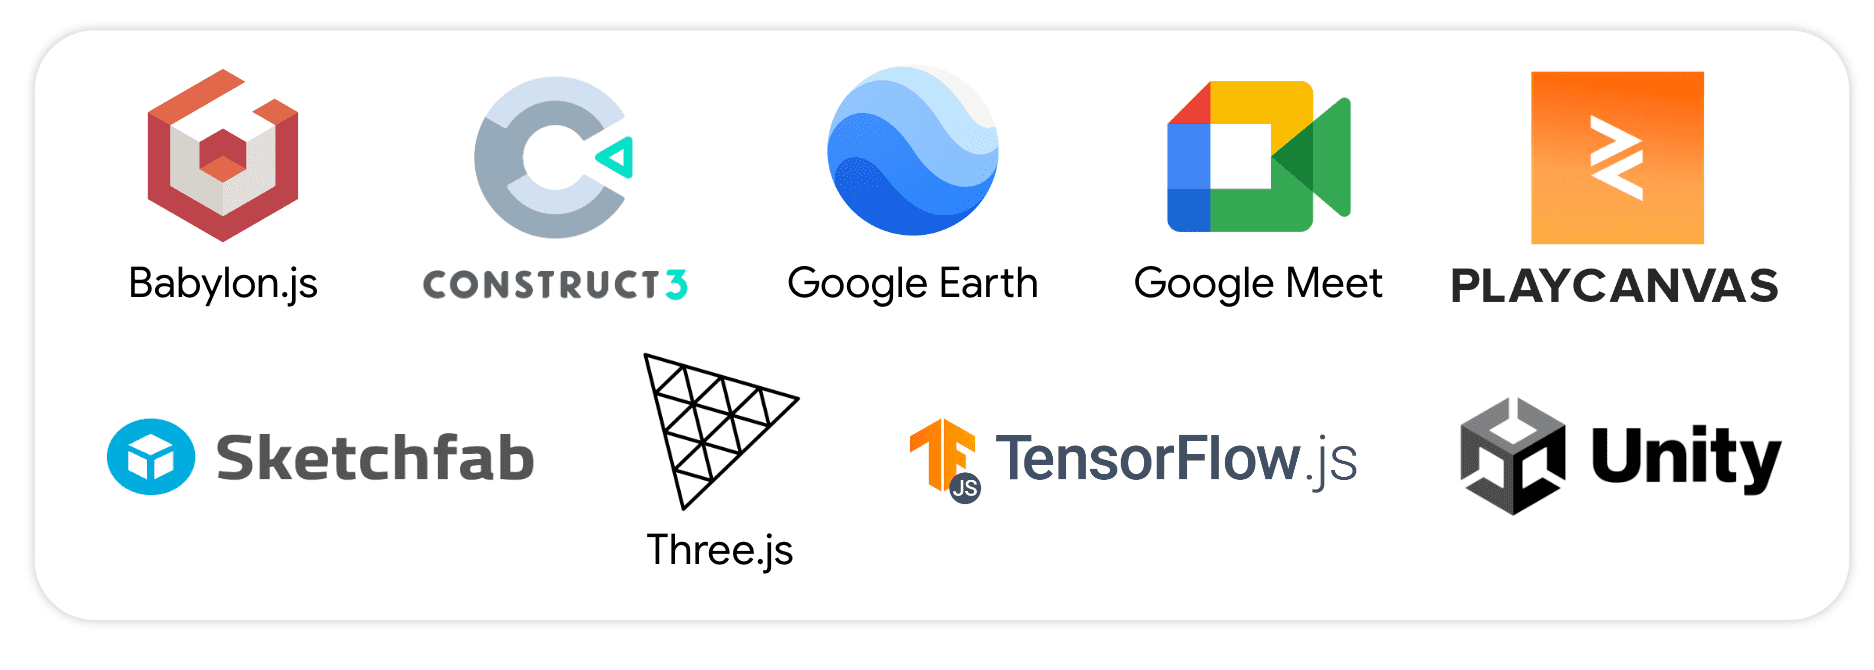 Babylon.js, Composition 3, Google 어스, Google Meet, PlayCanvas, Sketchfab, Three.JS, TensorFlow.js, Unity가 포함됩니다.